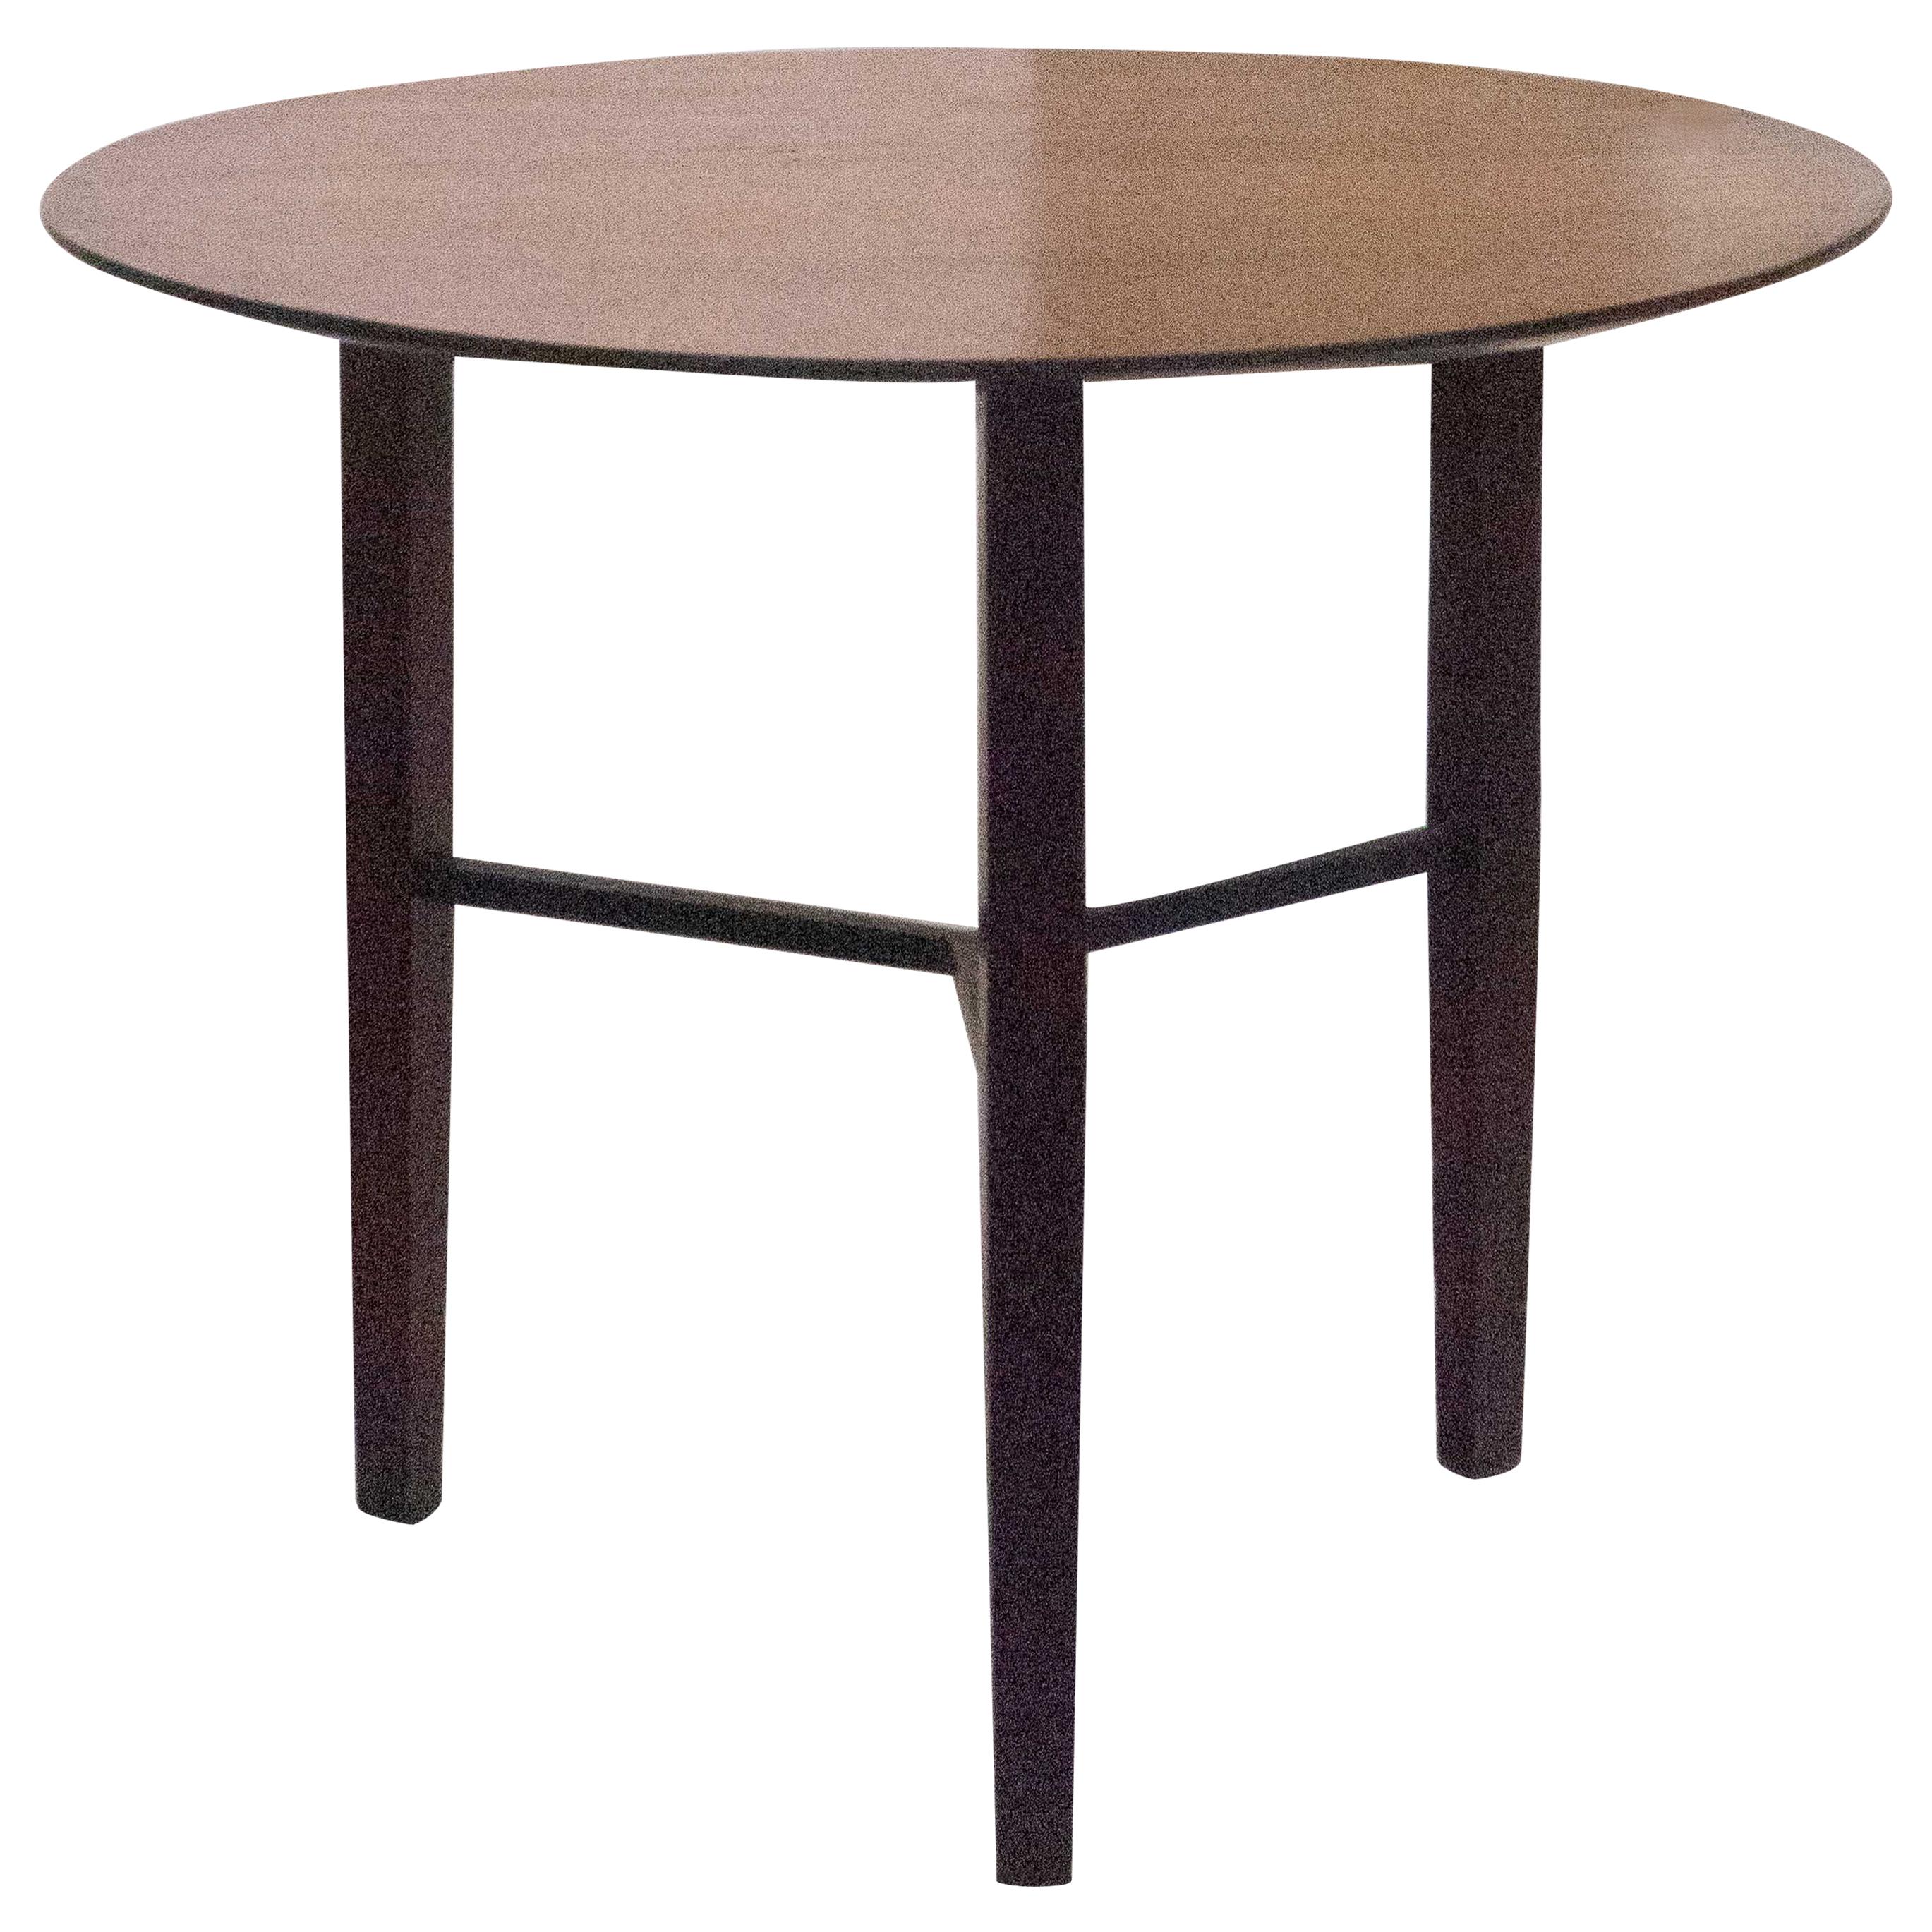 Caviuna Side Table by Carlo Hauner and Martin Eisler, Brazilian Modern Design